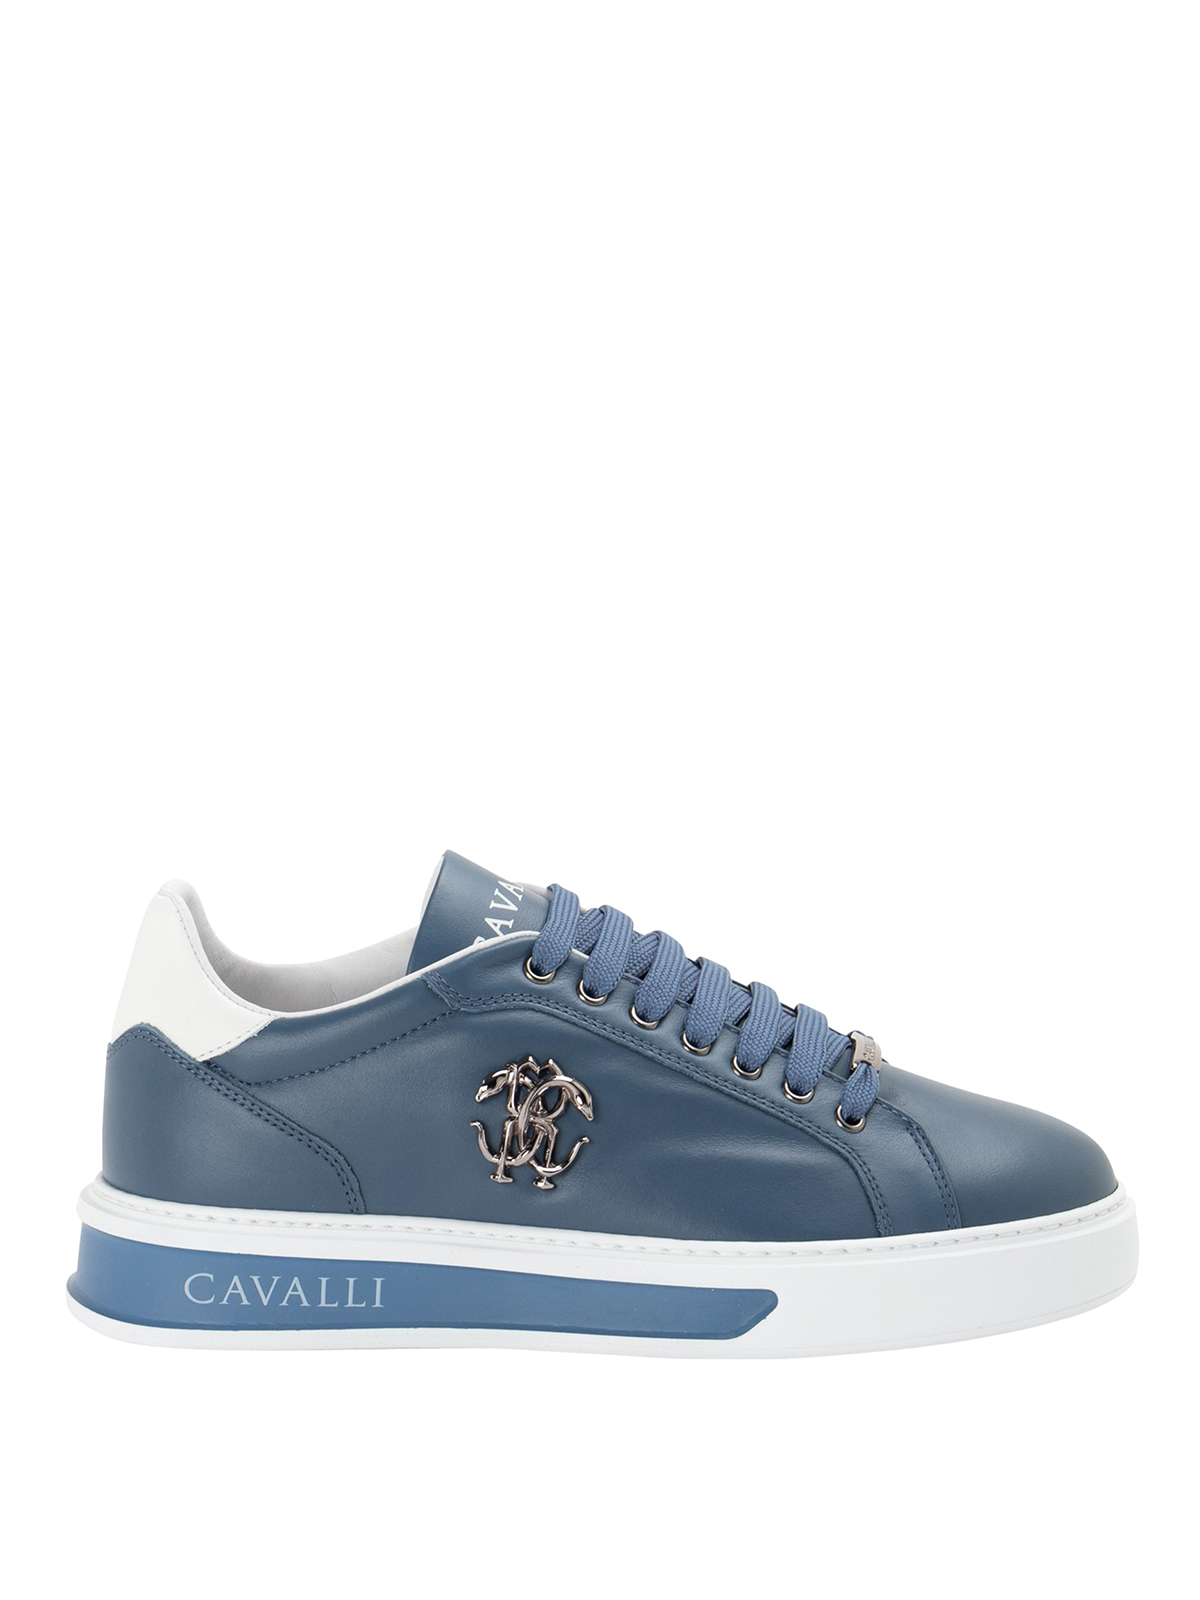 Roberto Cavalli, Shoes